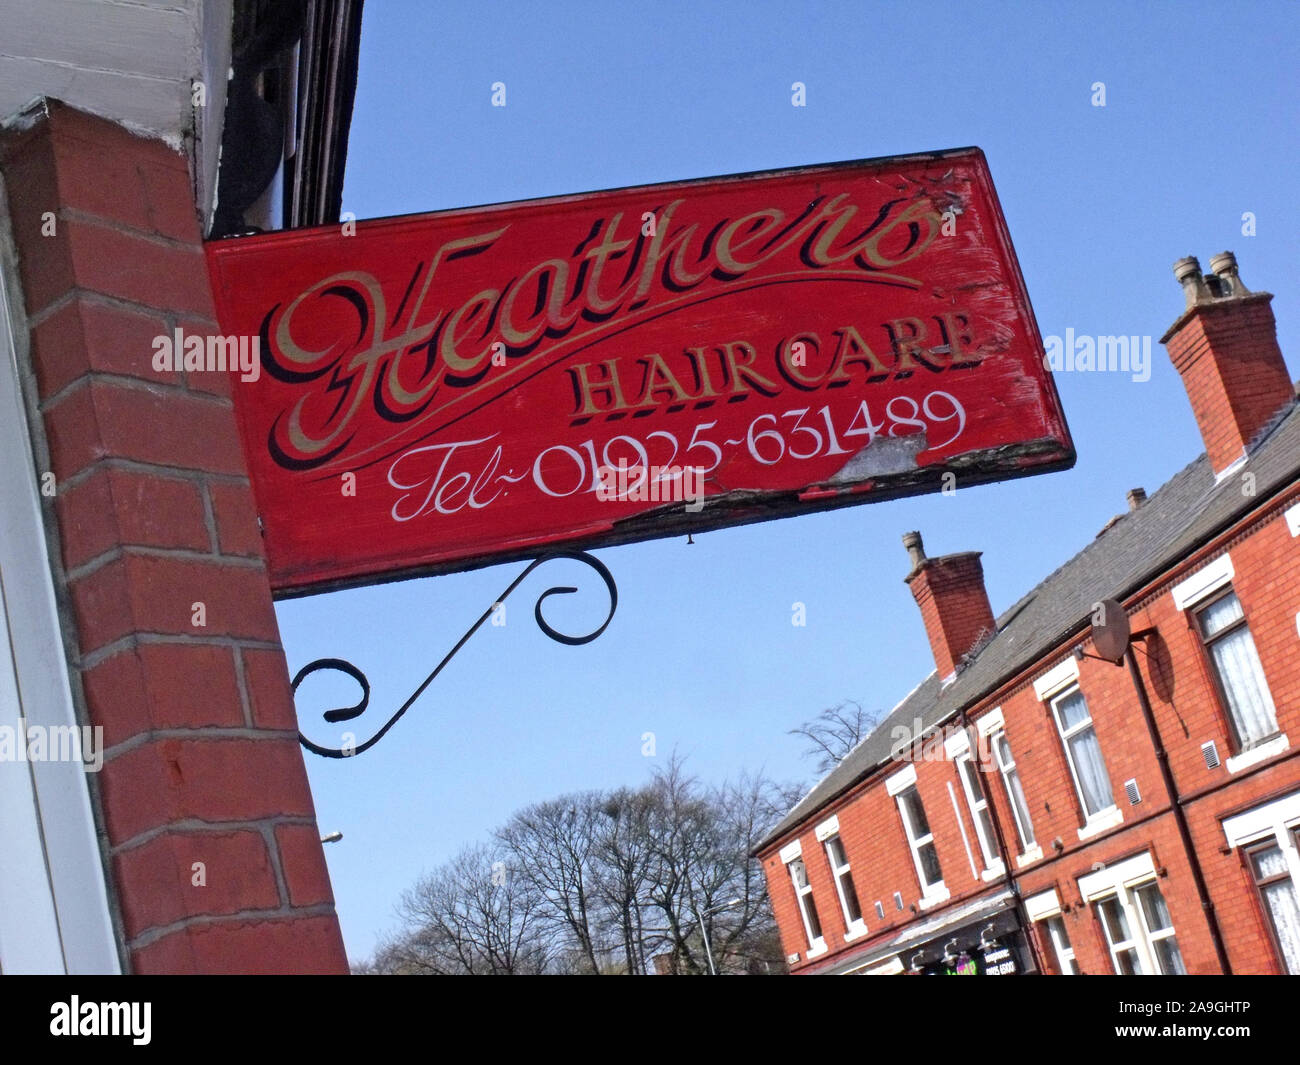 Heathers Haircare, 01925631489 Latchford village, Hair By Heather, 3 Thelwall Lane, Warrington, Cheshire, England, WA4 1LJ Stock Photo